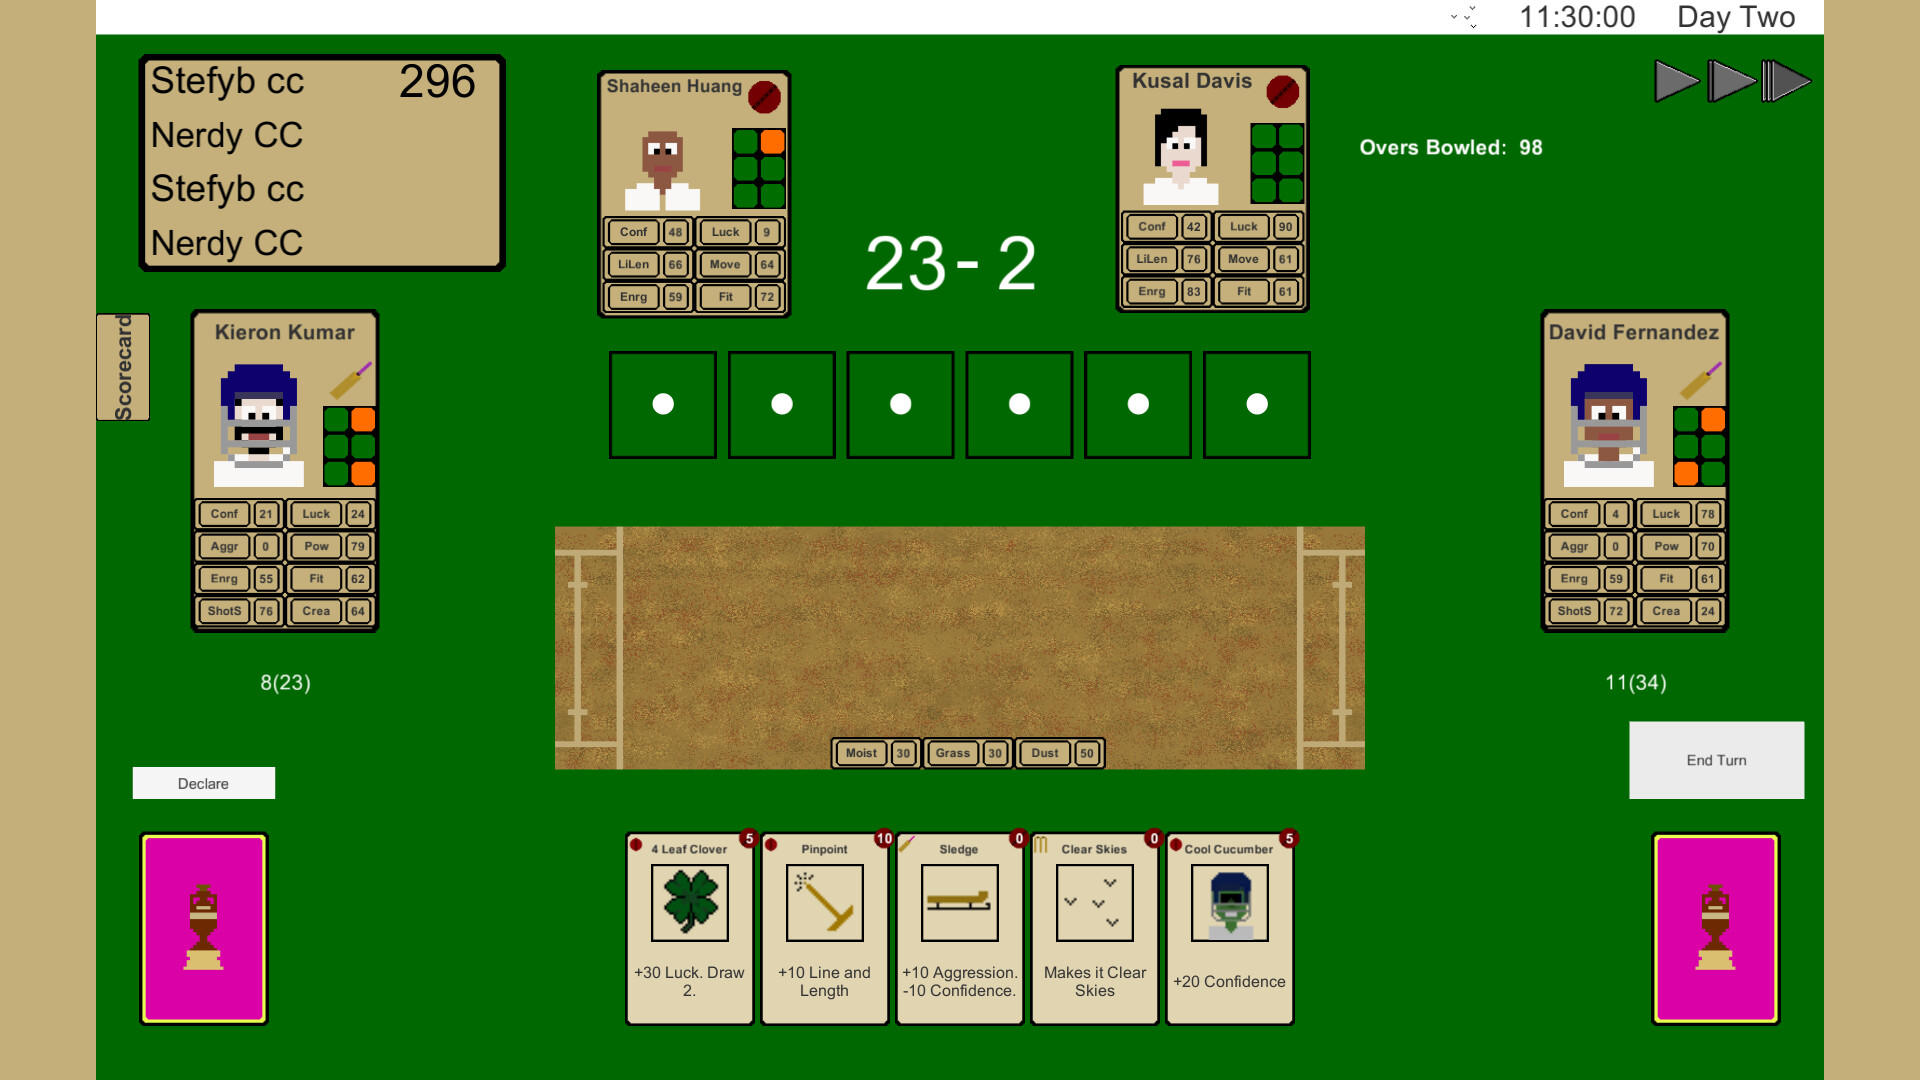 Cool Cucumber Cricket screenshot game